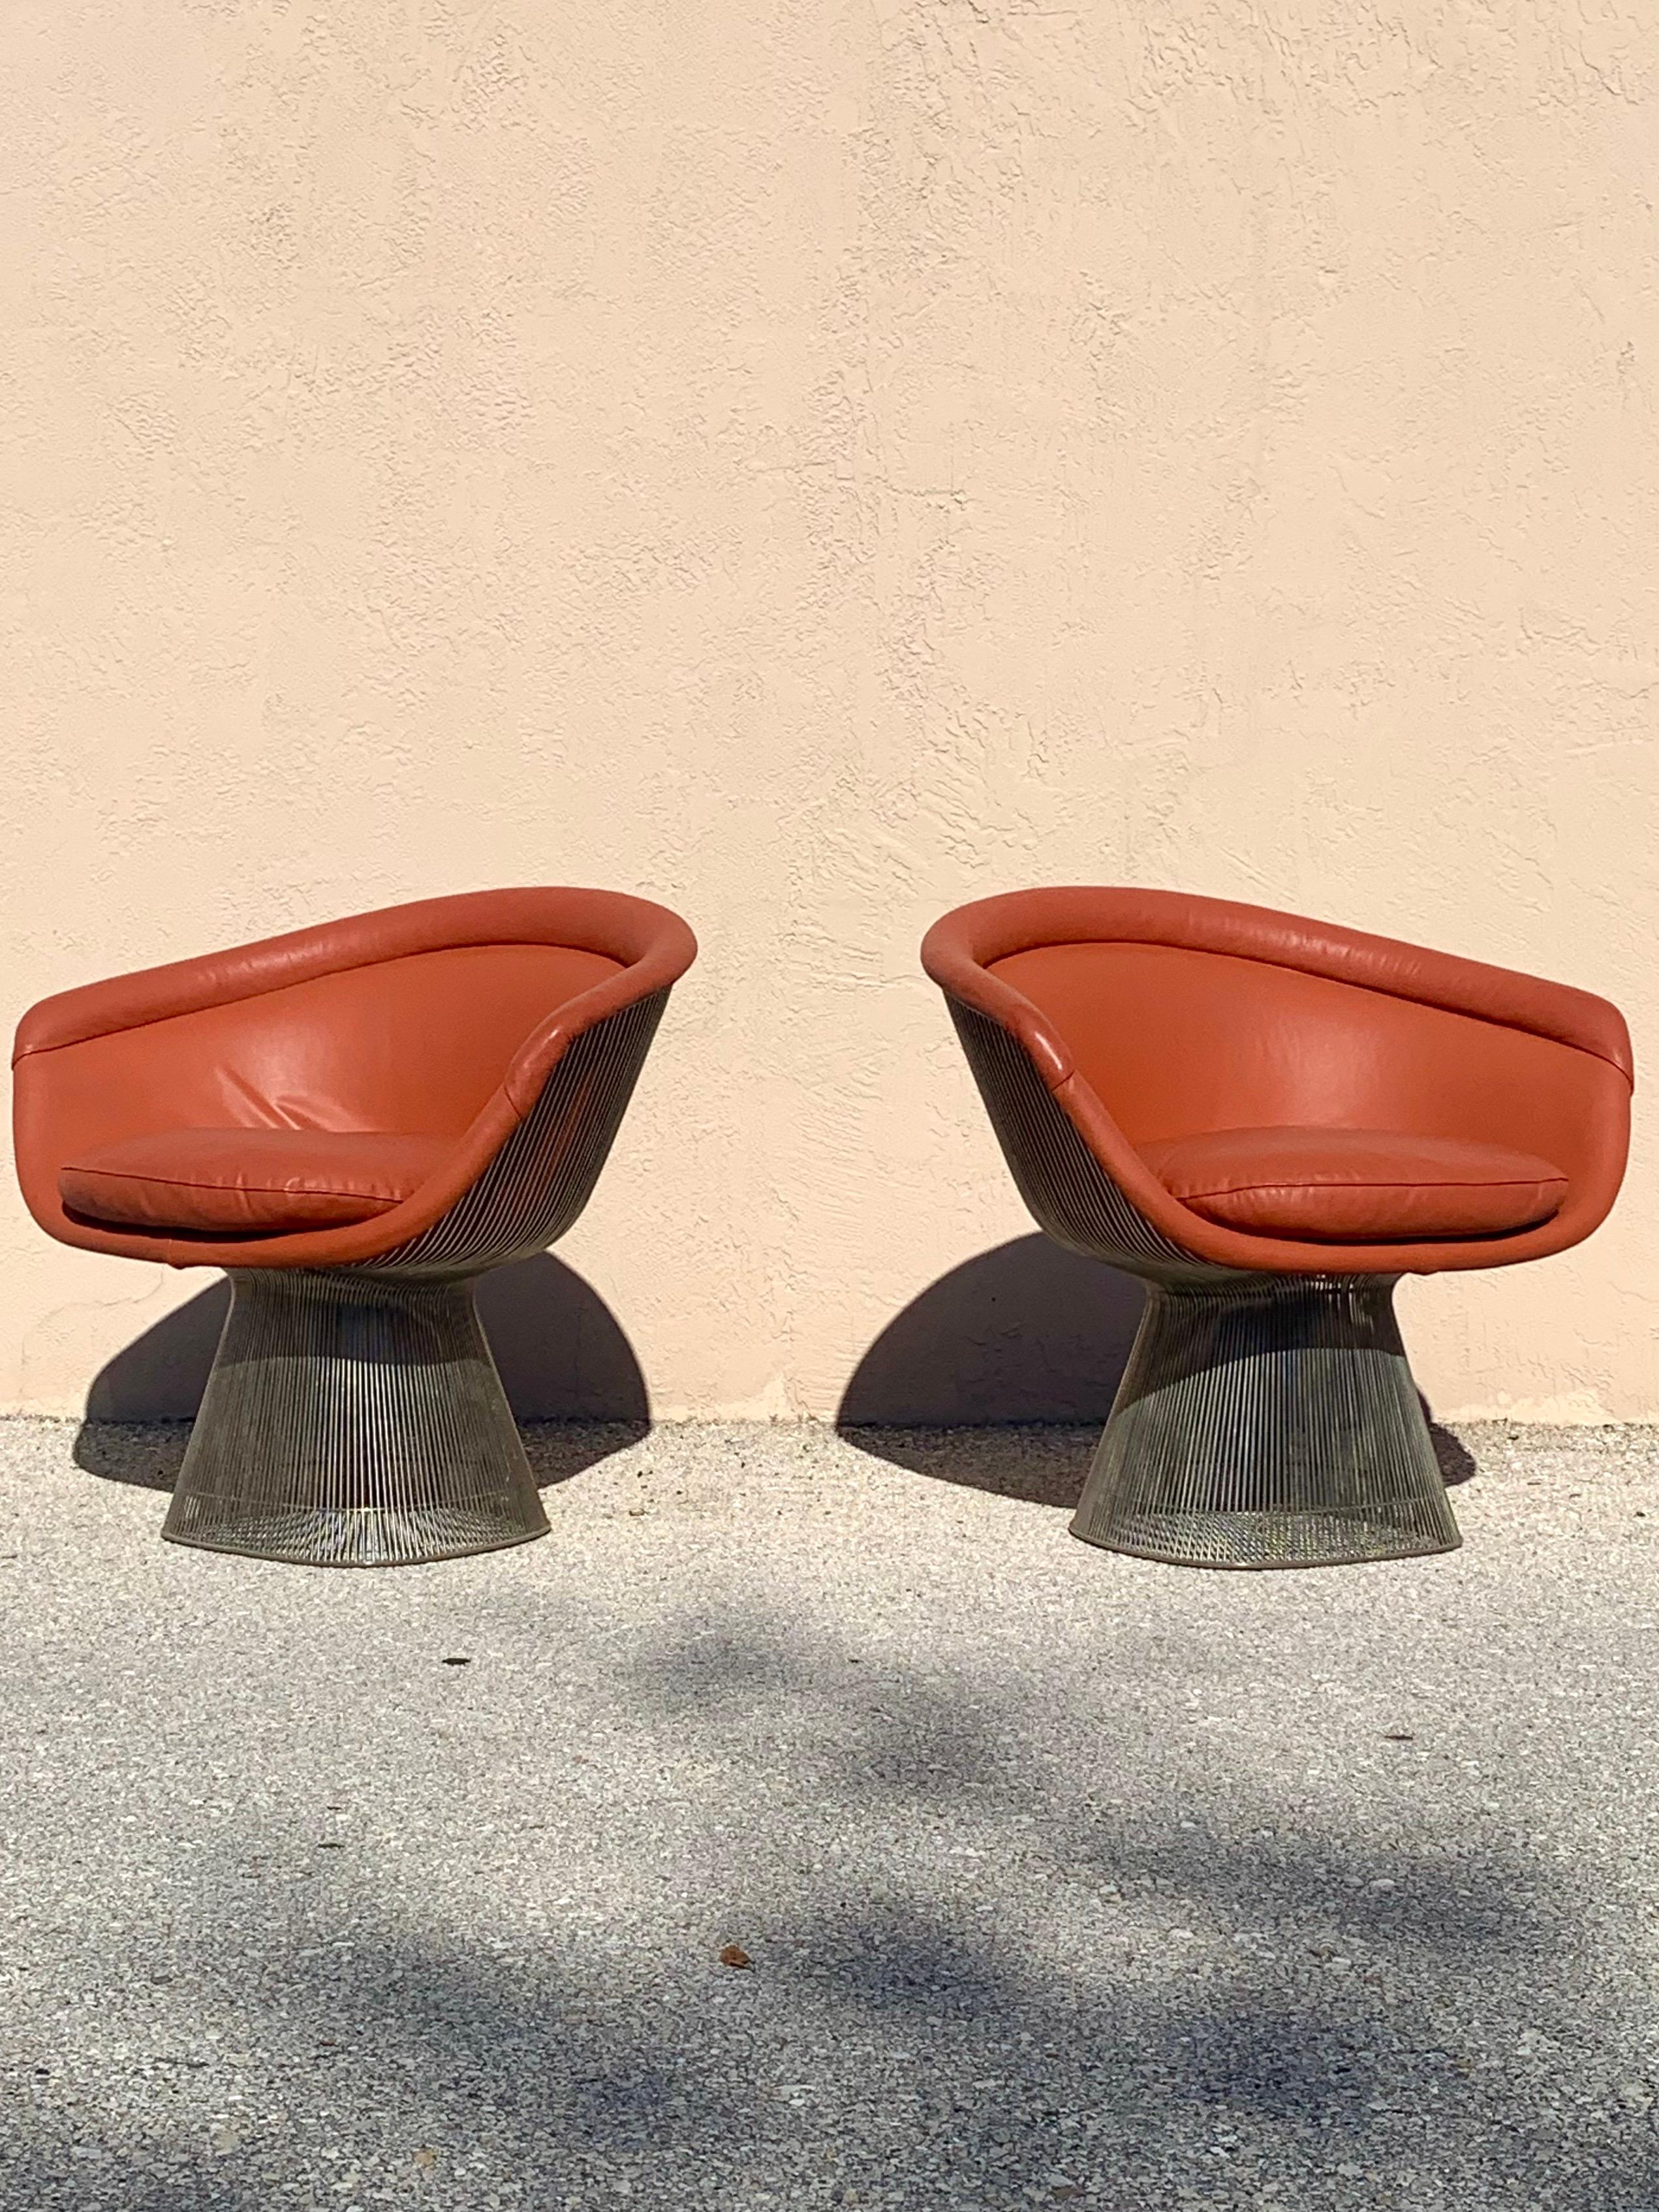 American Warren Platner Chairs for Knoll, Nickel Frames, Orange Leather Upholstery, Pair